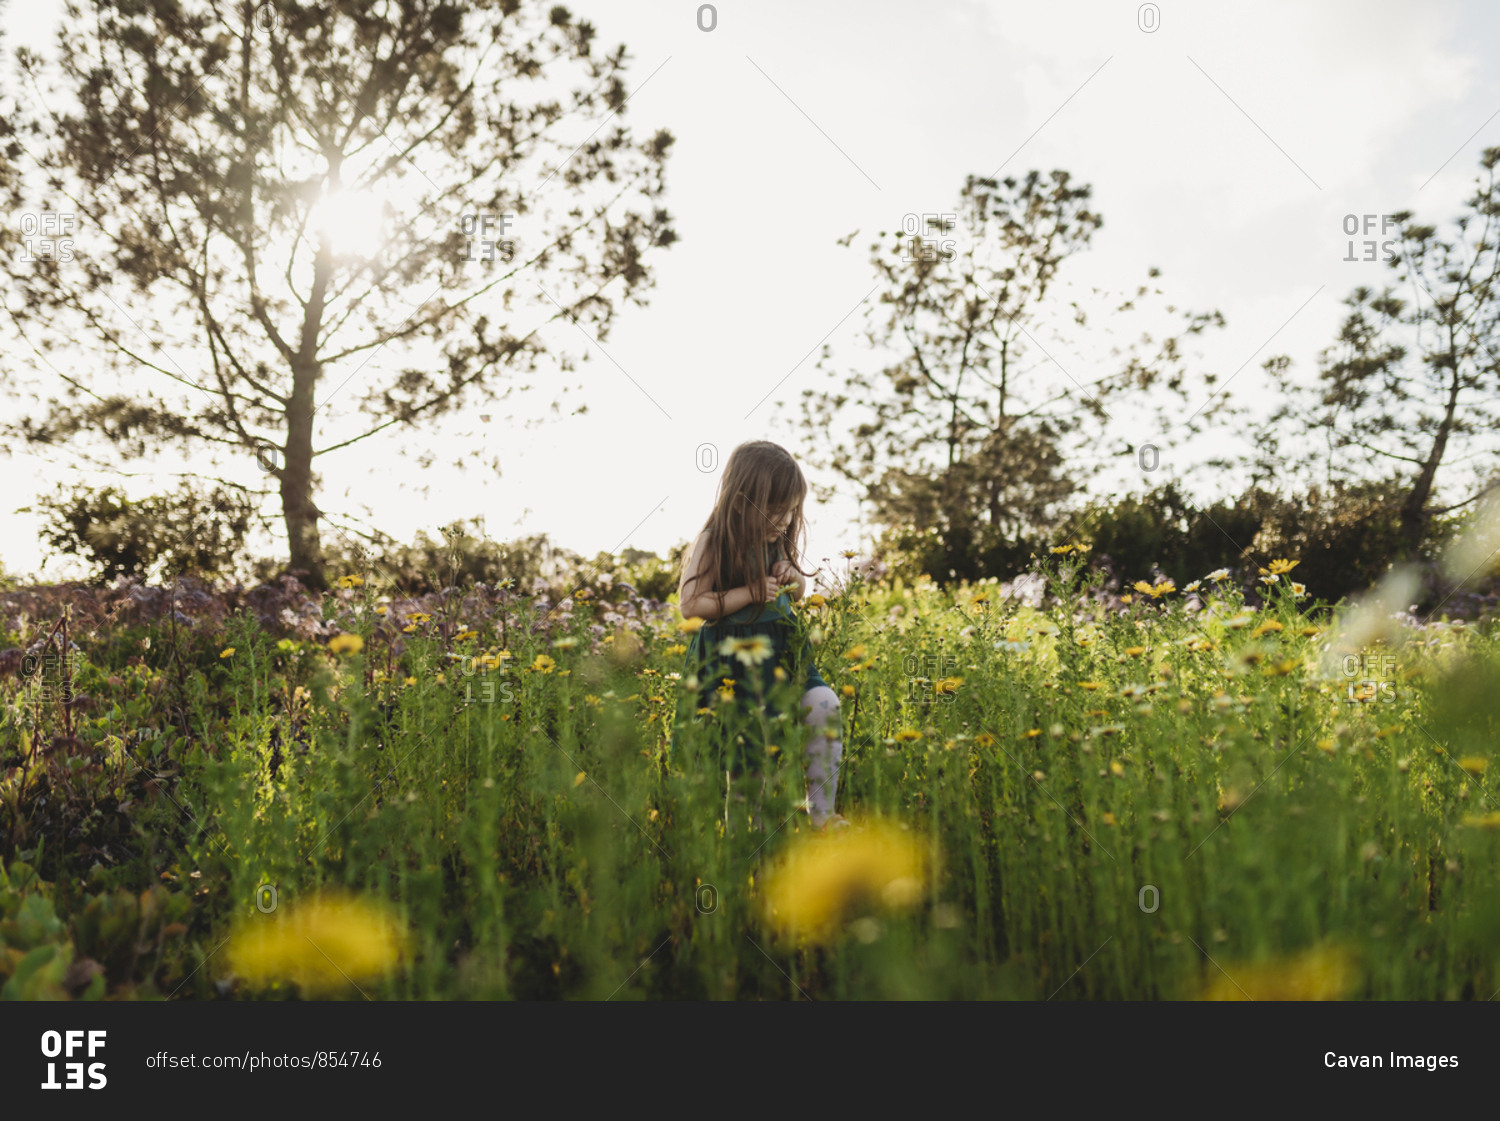 Landscape of little girl looking down in field of spring flowers